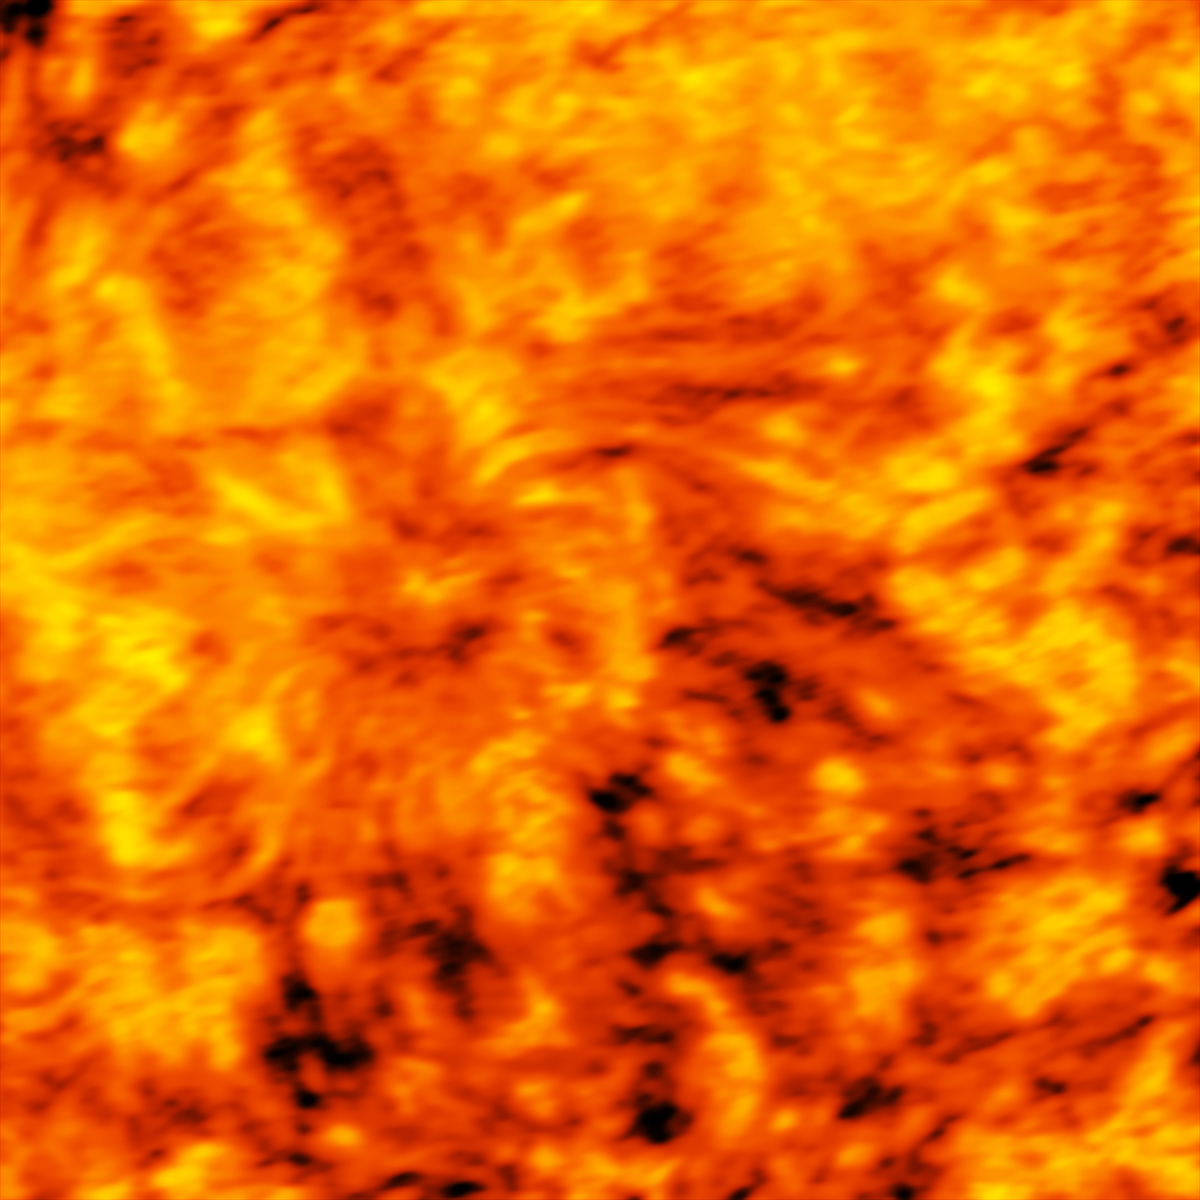 ALMA’s Band 3 Image of the Sun